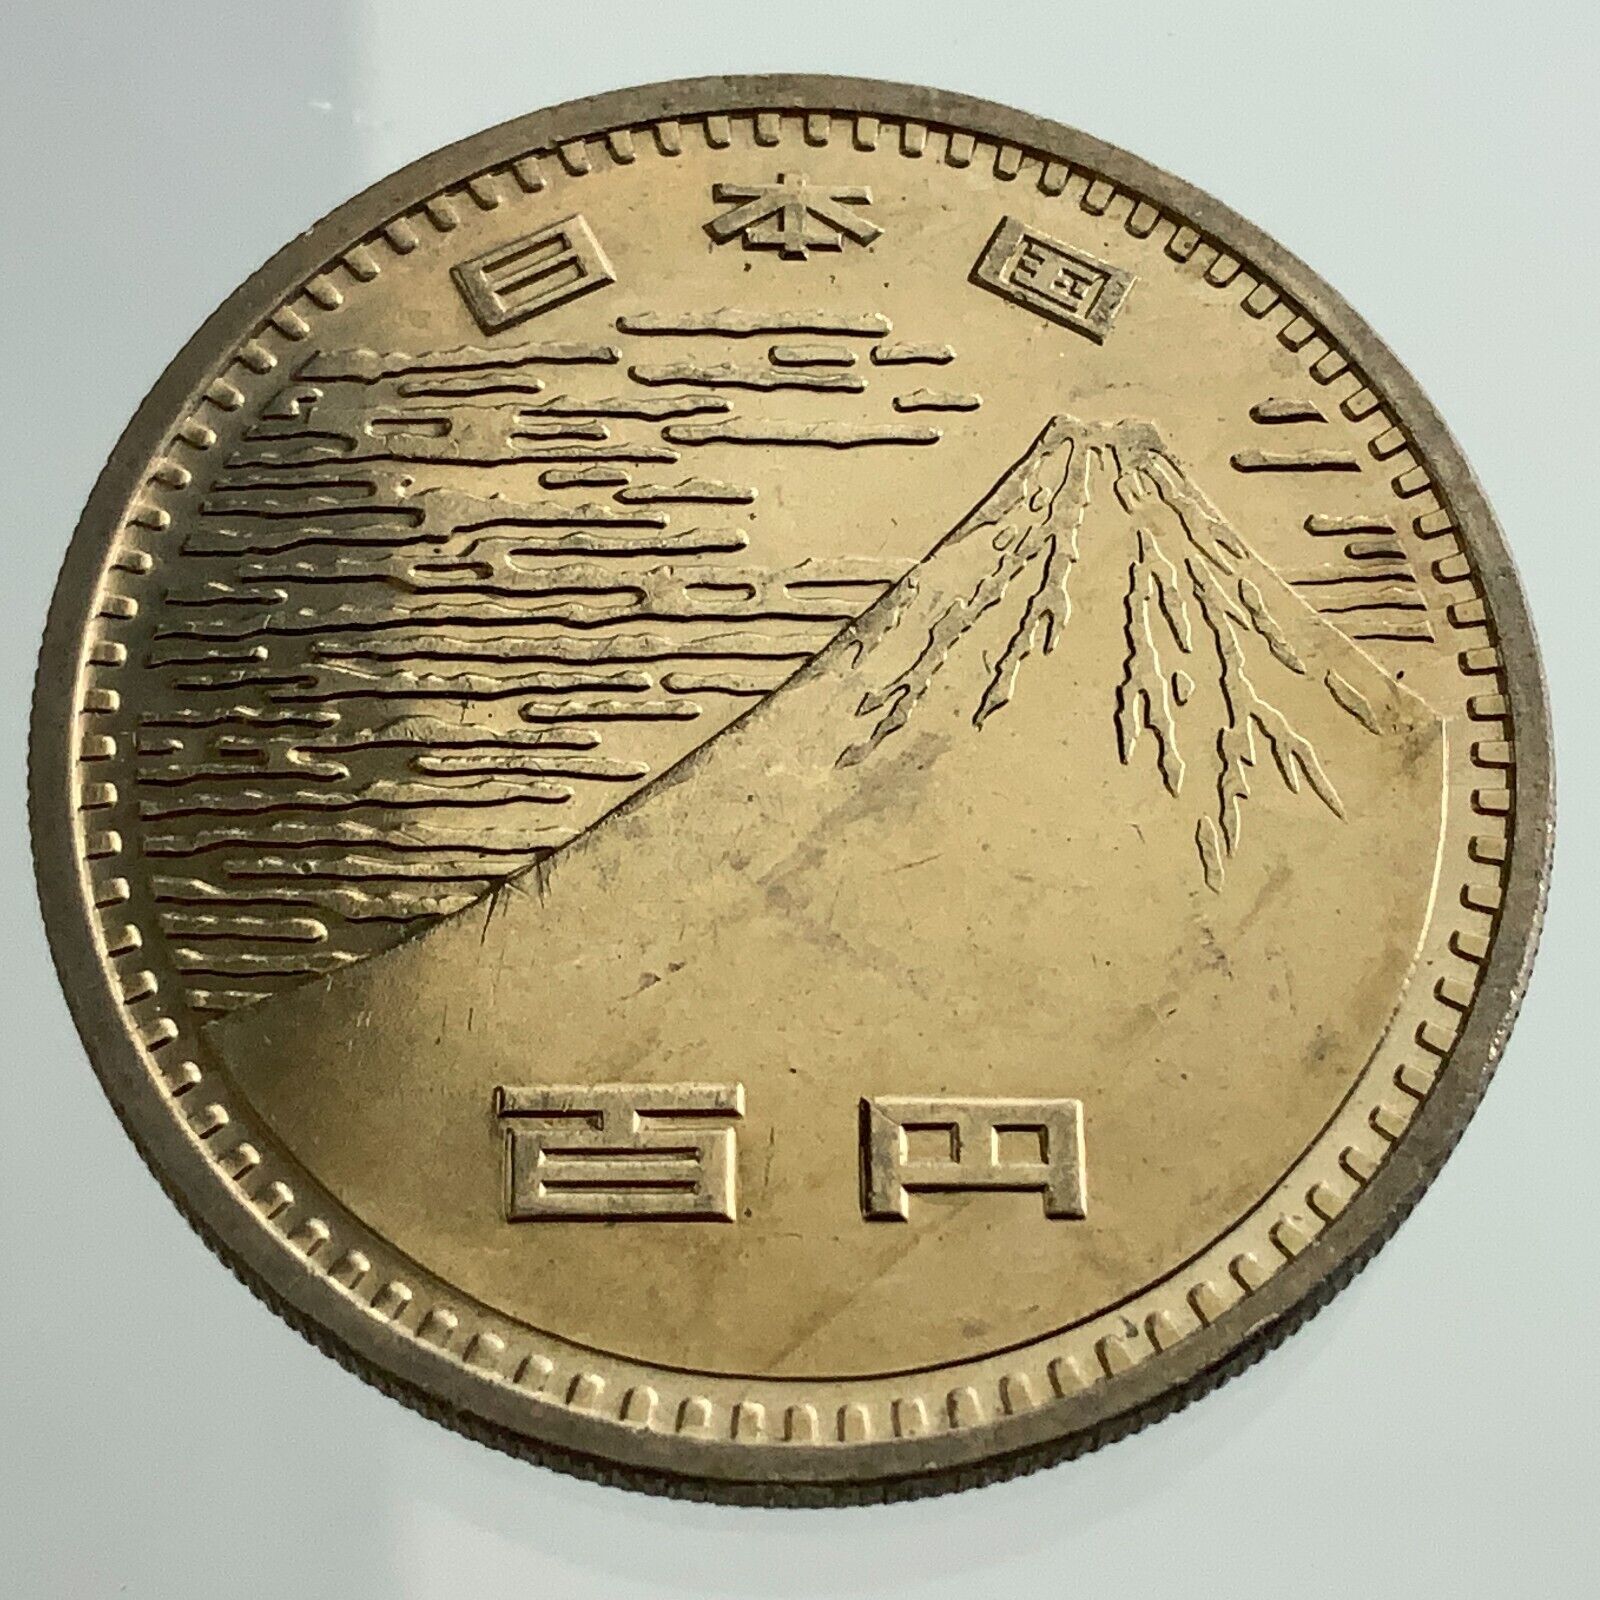 Japan Mount Fuji 5th Station Souvenir Coin - family-gadgets.ru